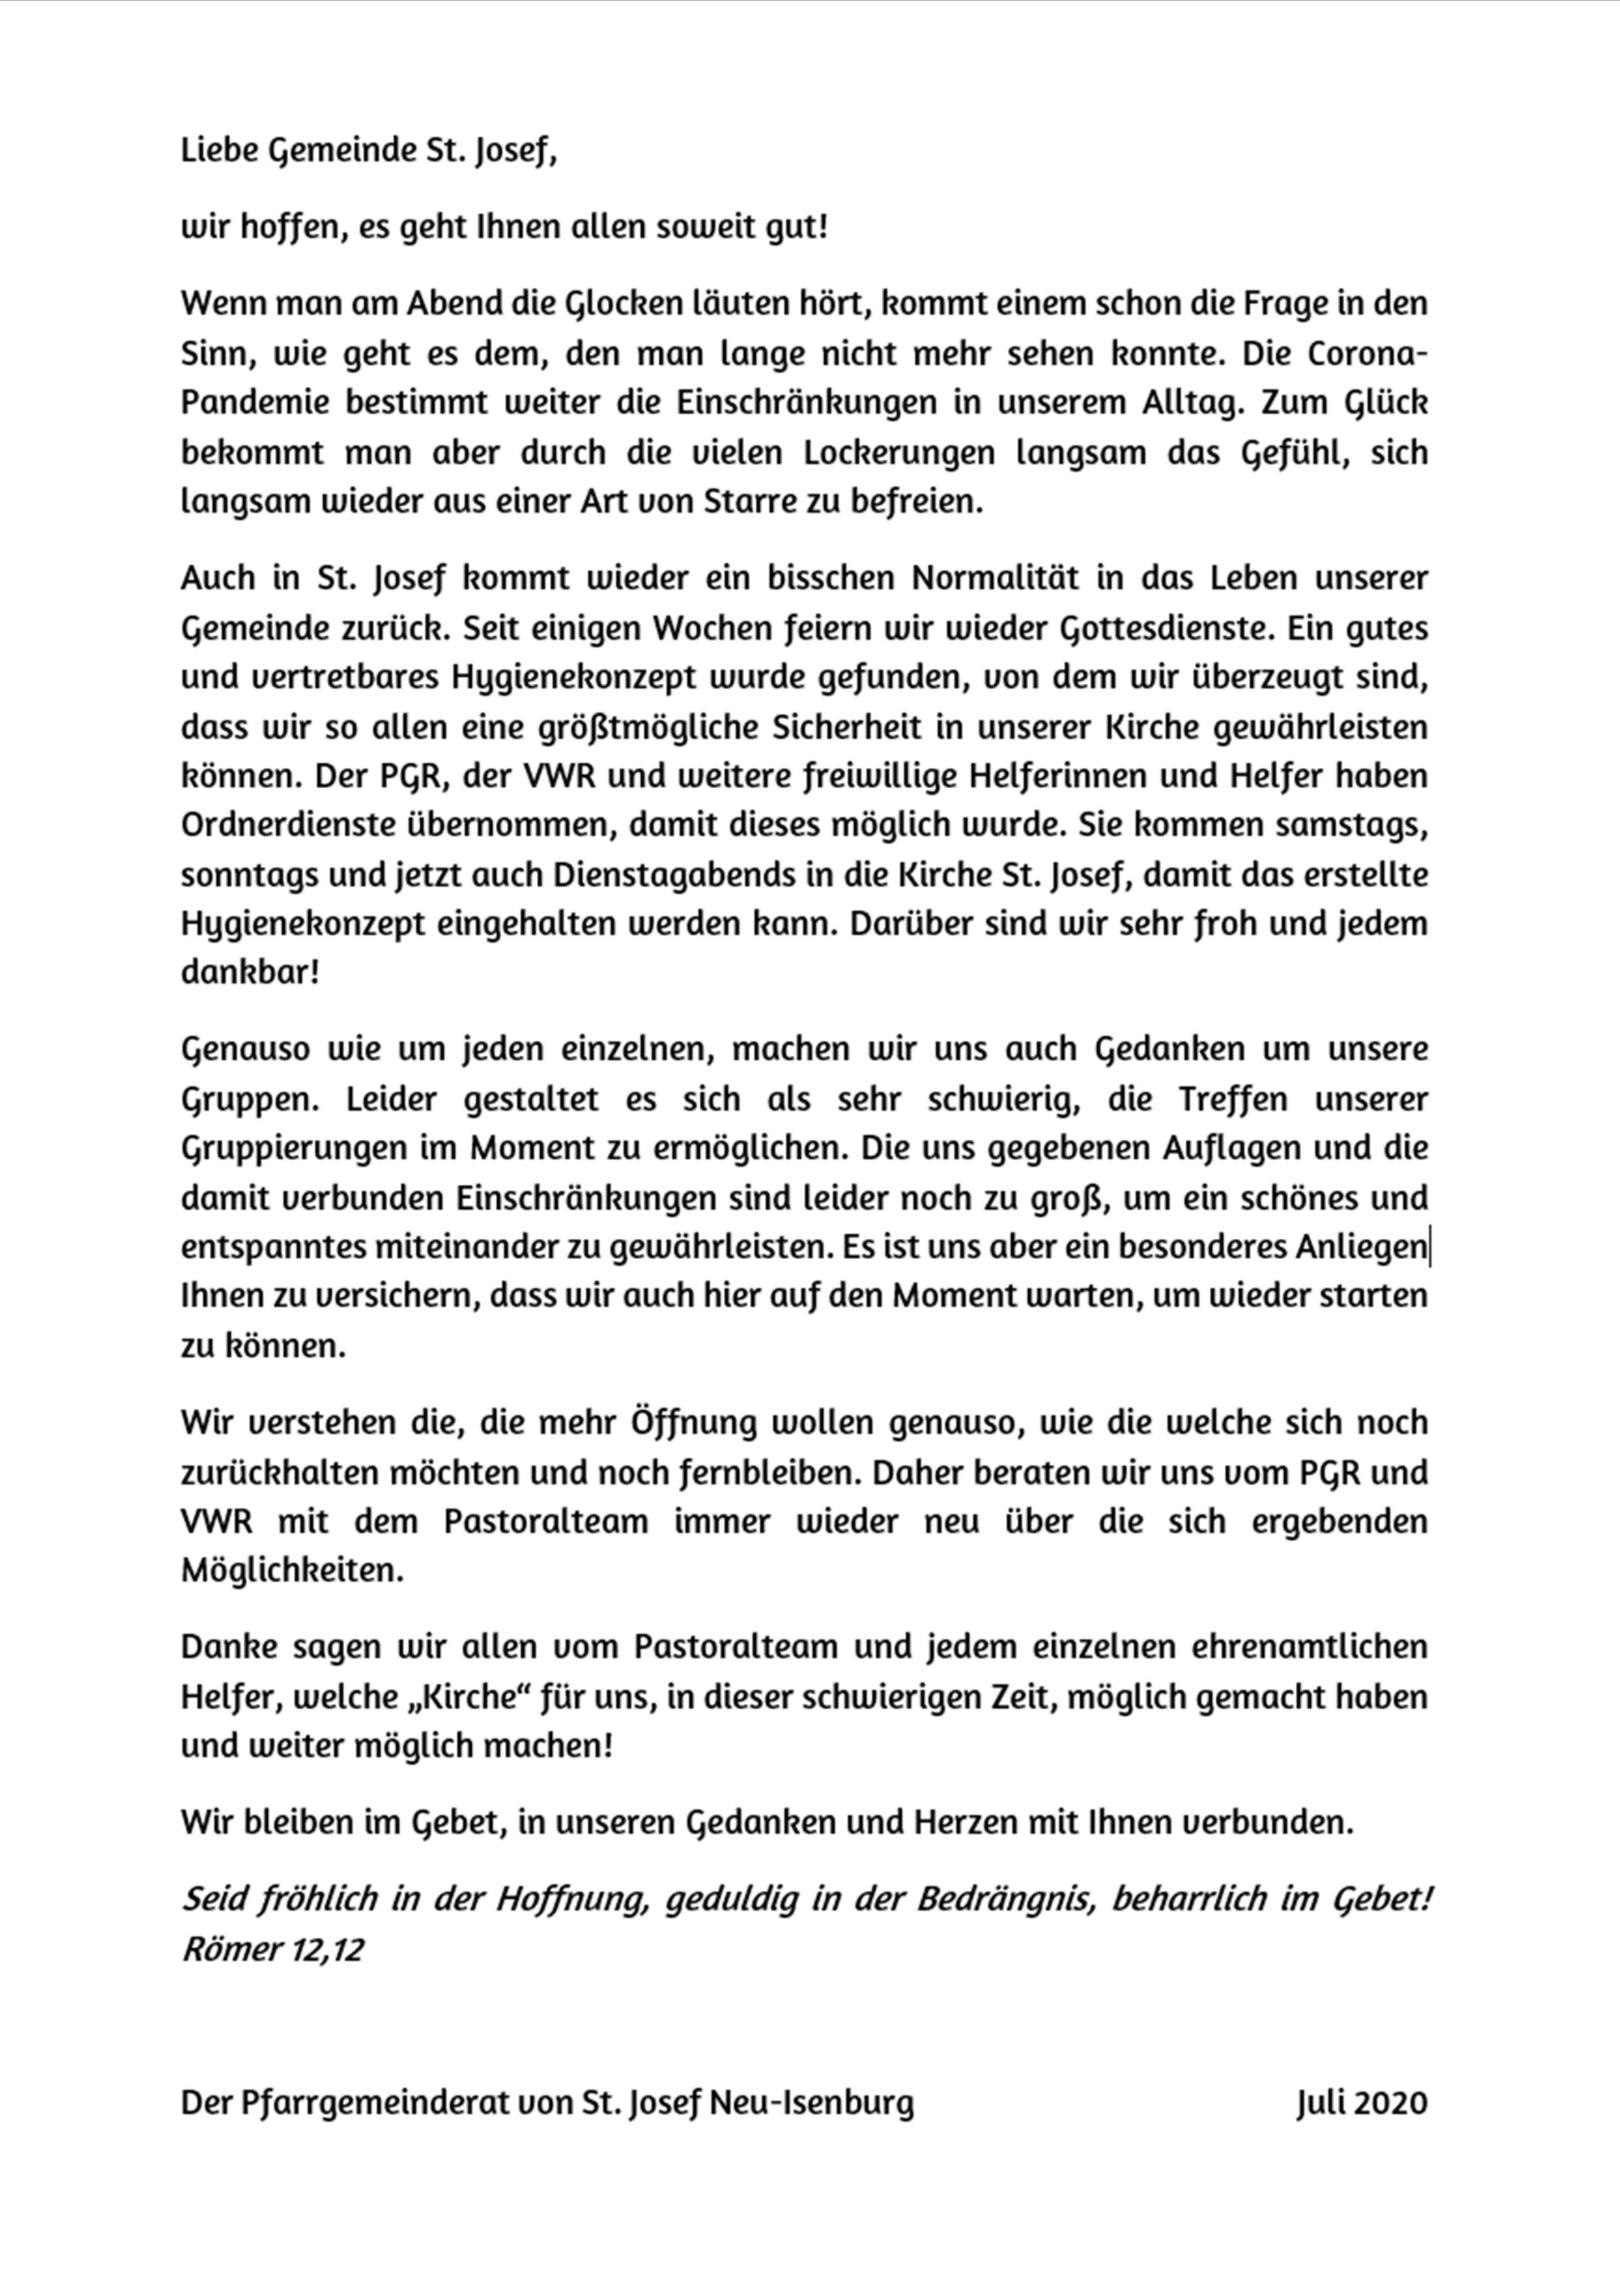 PGR Brief an Gemeinde (c) PGR St. Josef